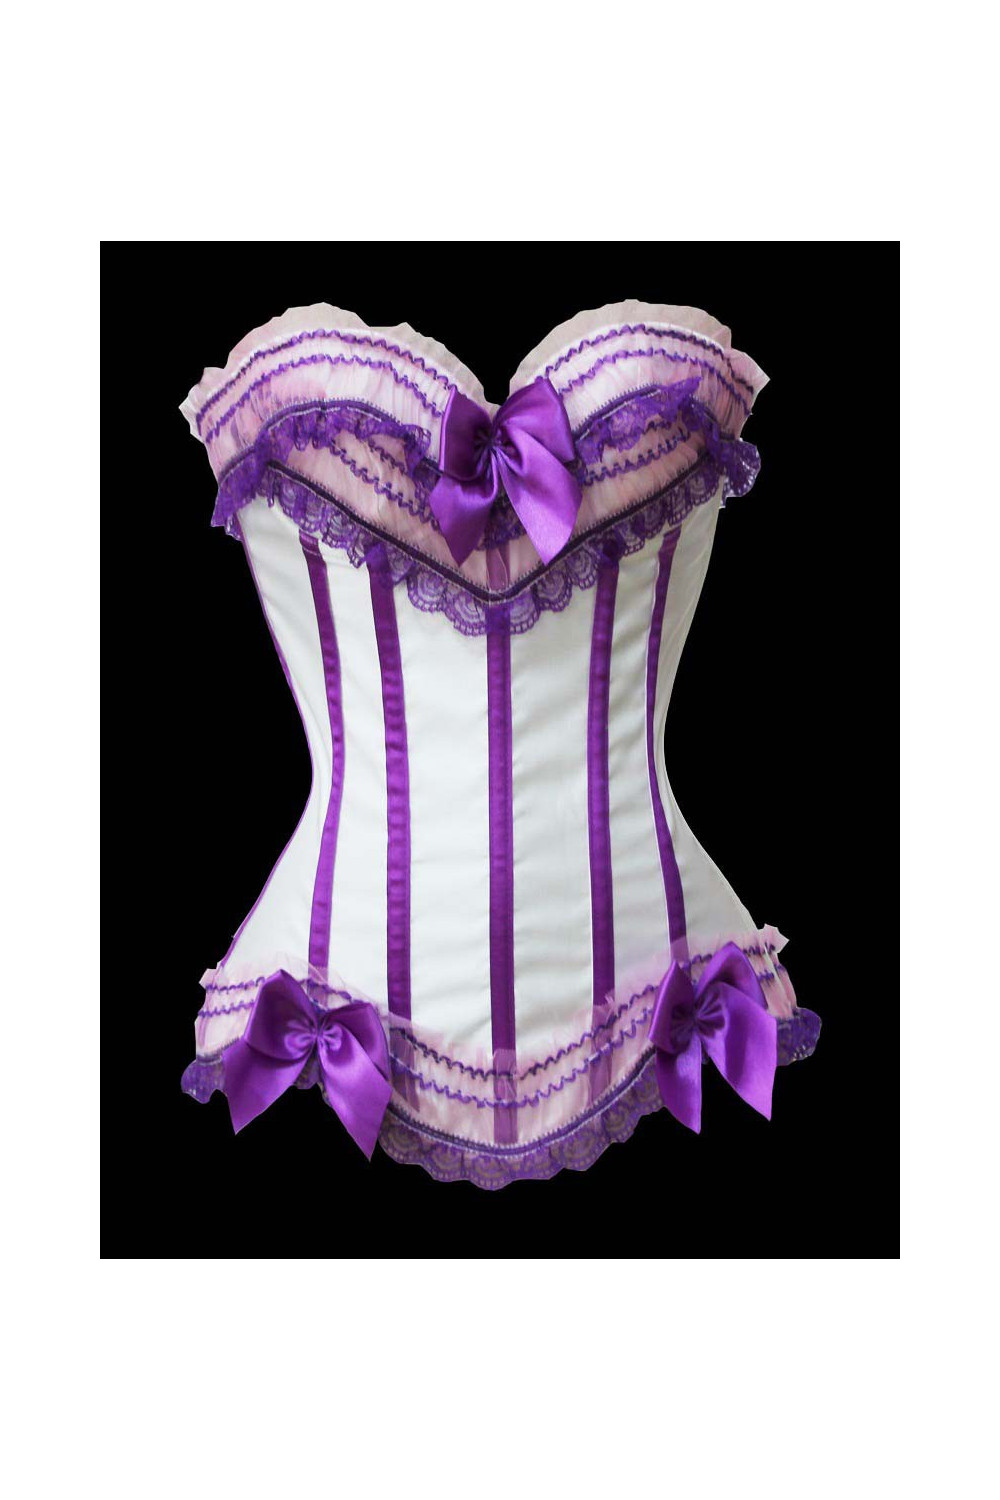 Blue or purple corset